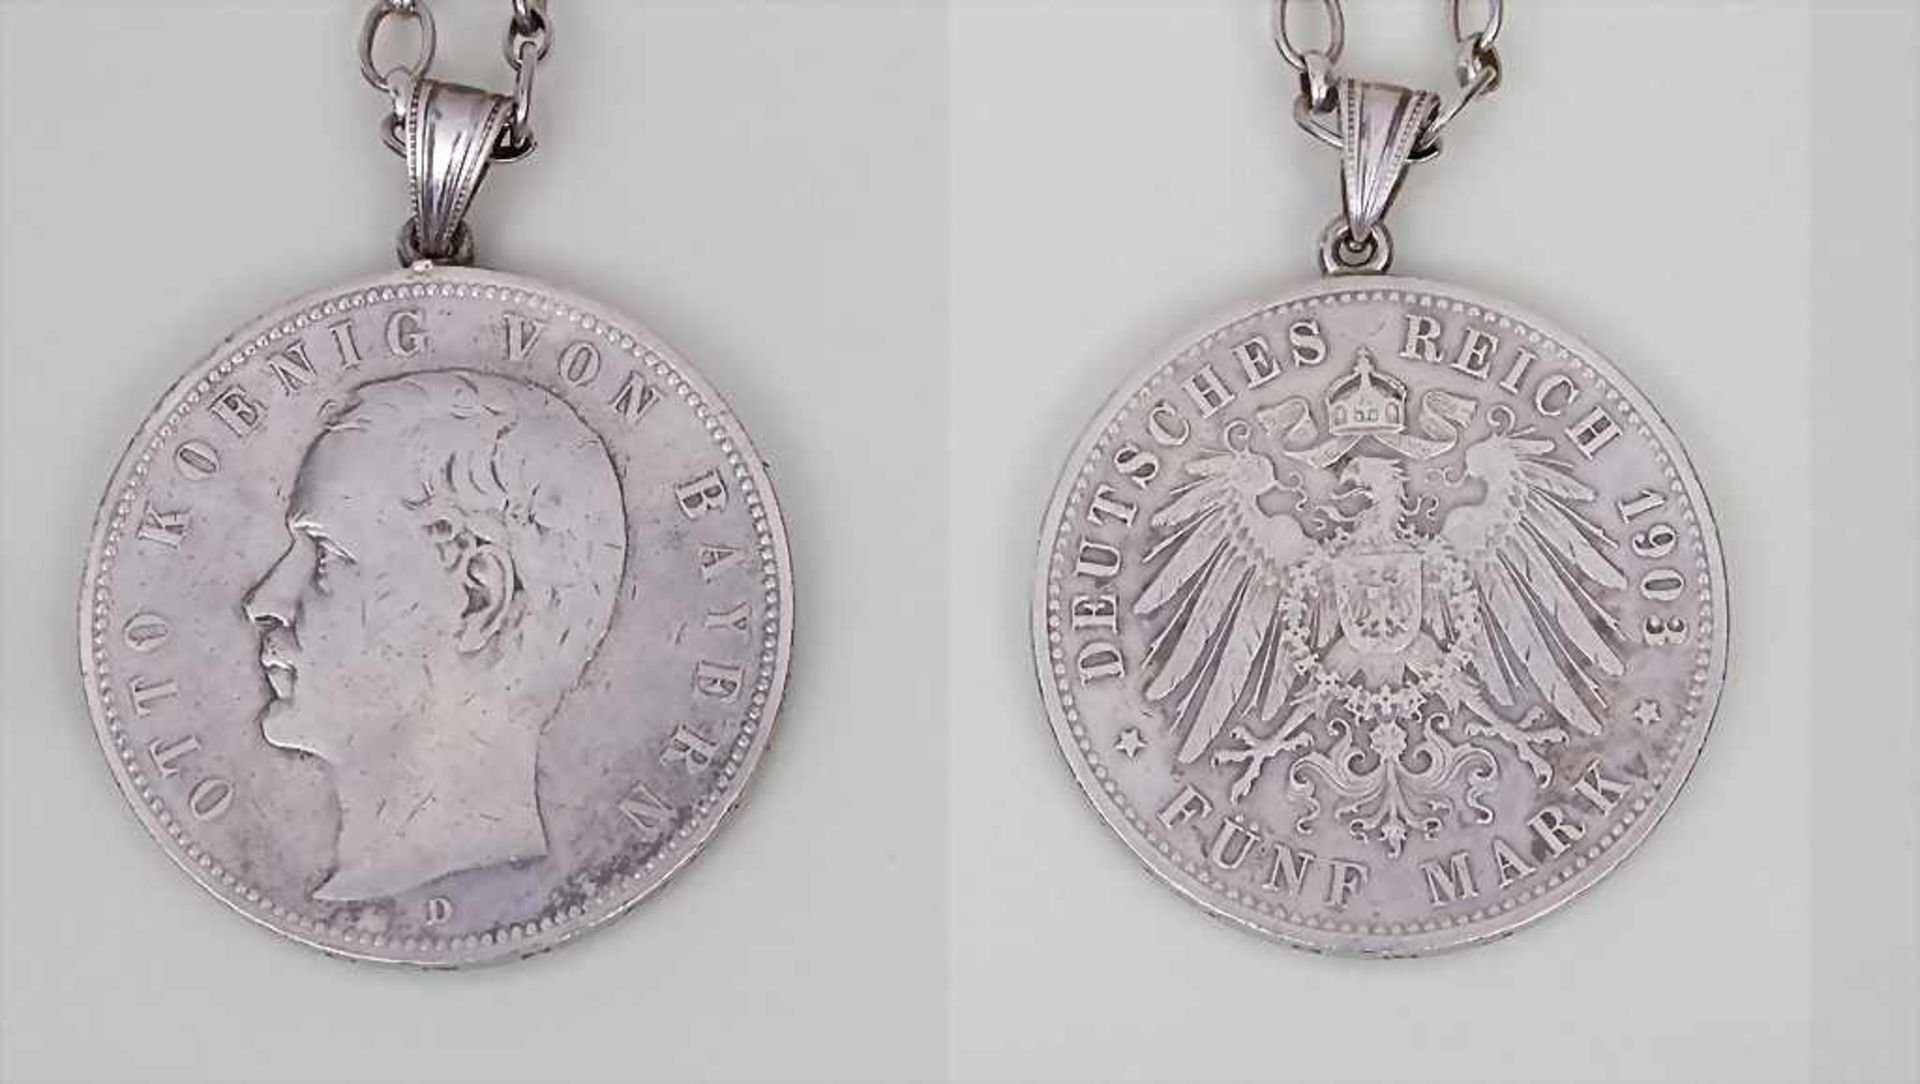 Münzanhänger 5 Mark 1903 Otto König von Bayern / A coin pendant Material: Feinsilber 900, Kette